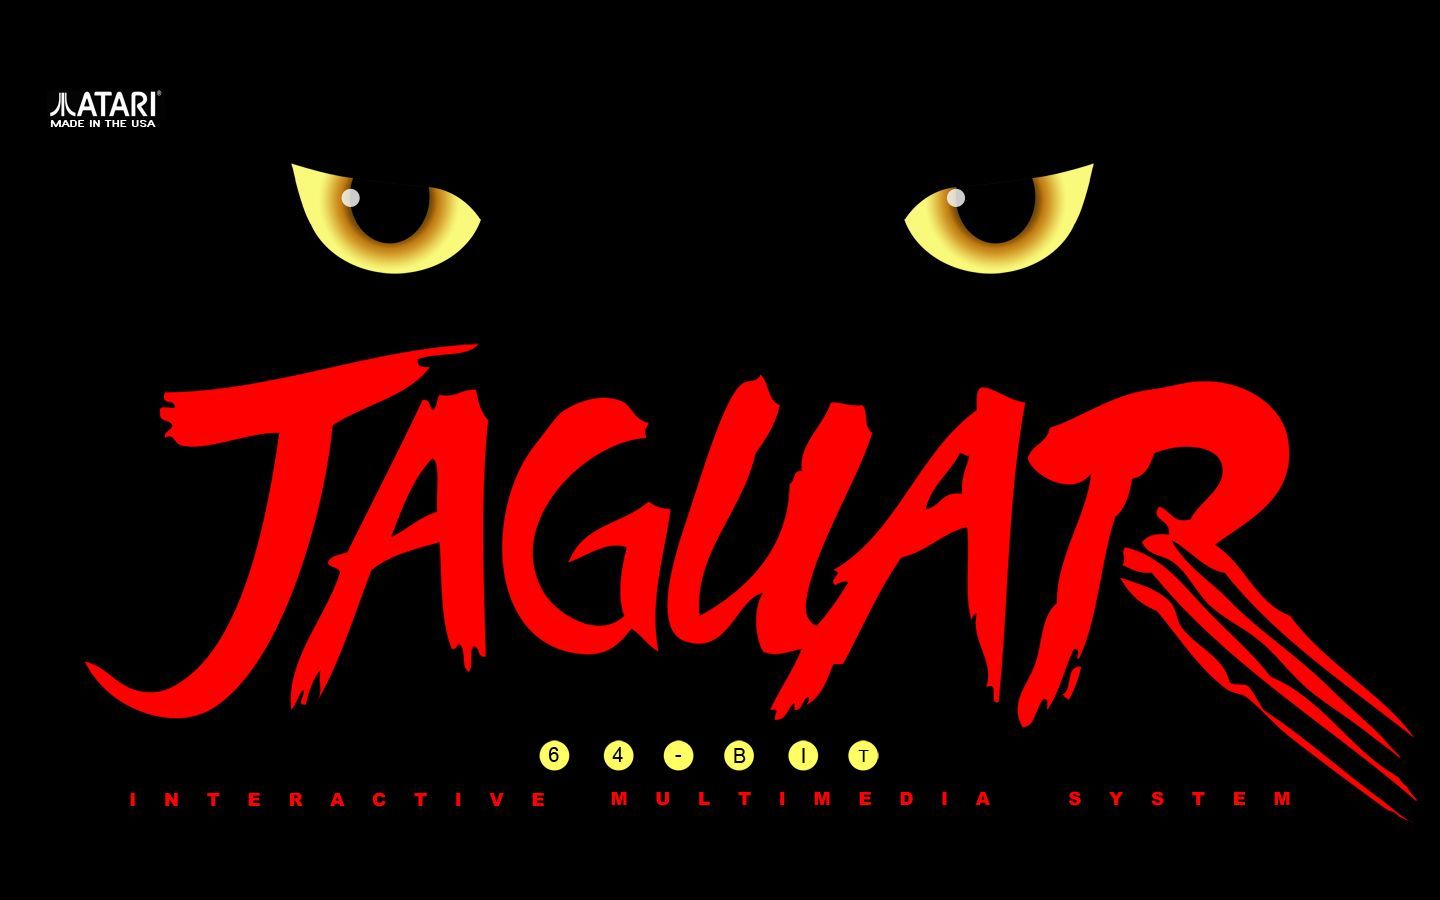 Atari jaguar. Атари Ягуар. Atari Jaguar игры. Atari Jaguar logo. Ягуар консоль игры.